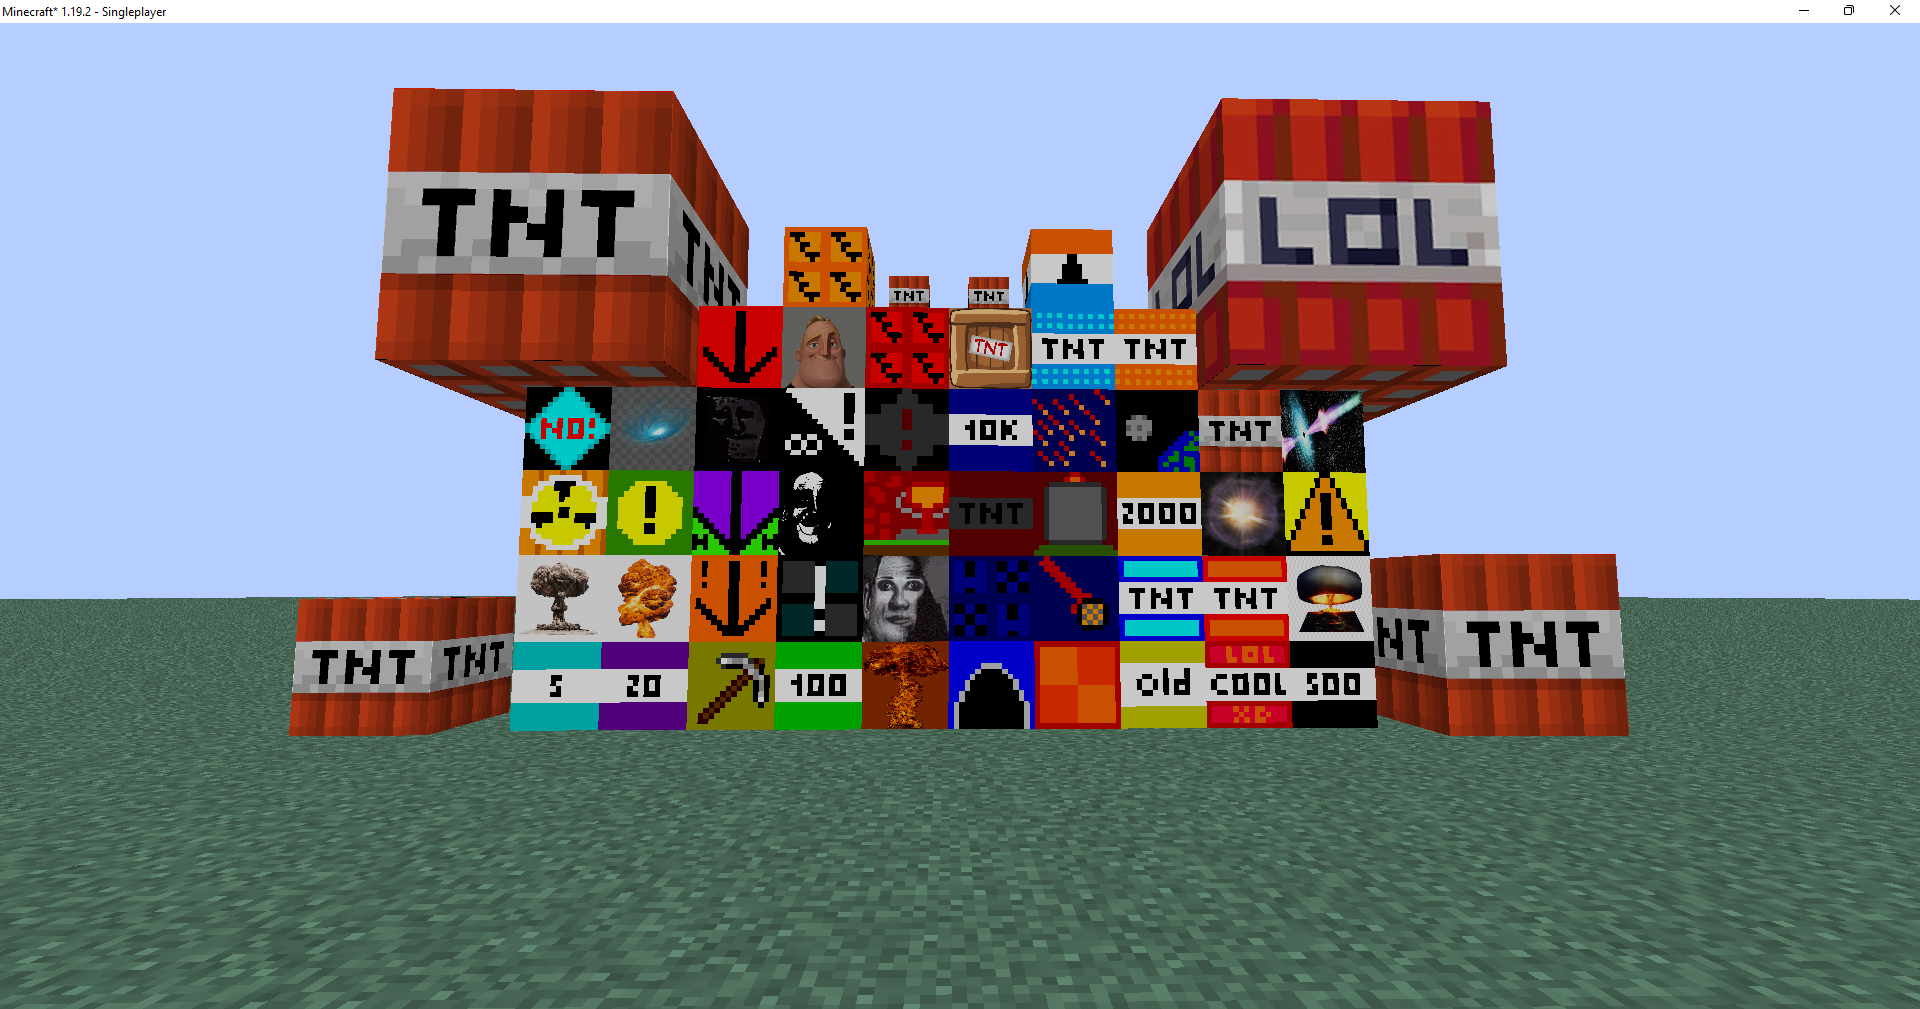 Super Lucky Blocks addon for Minecraft PE 1.16.40